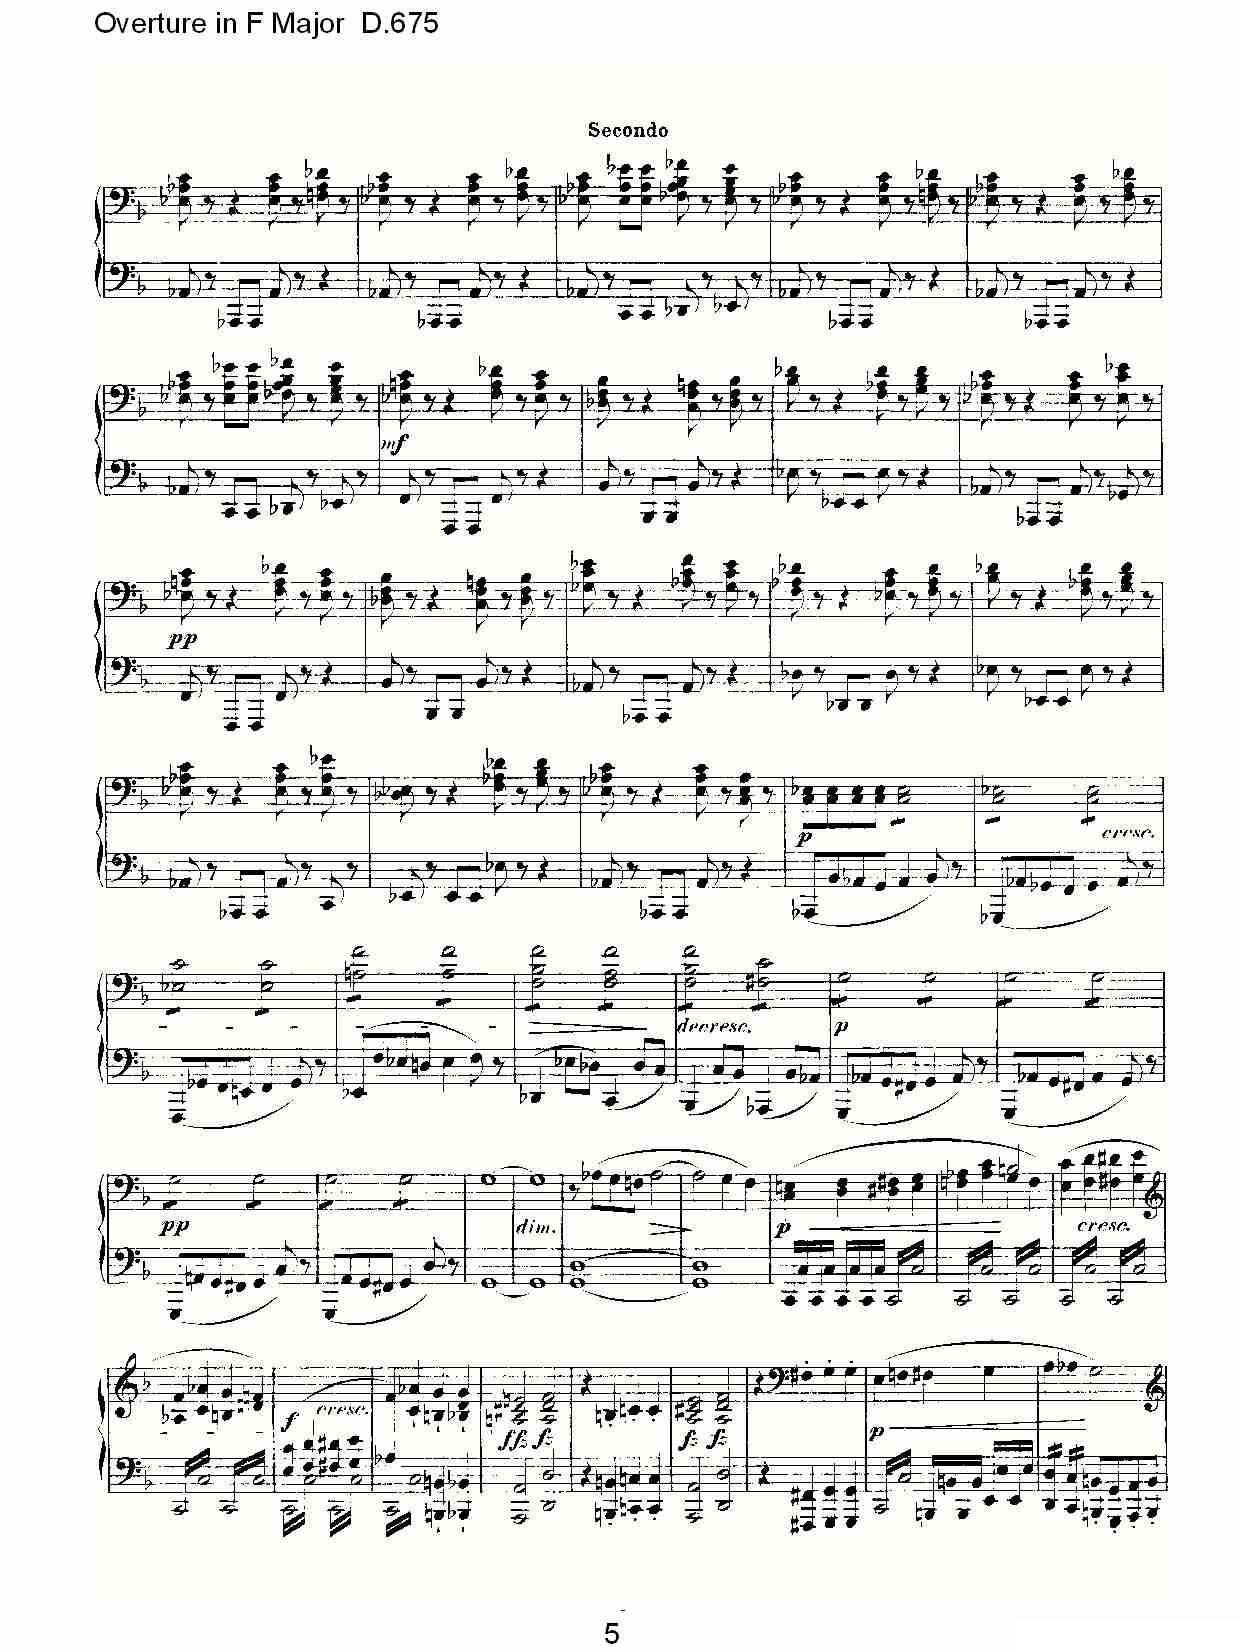 Overture in F Major D.675（Ｆ大调序曲 D.675）钢琴曲谱（图5）